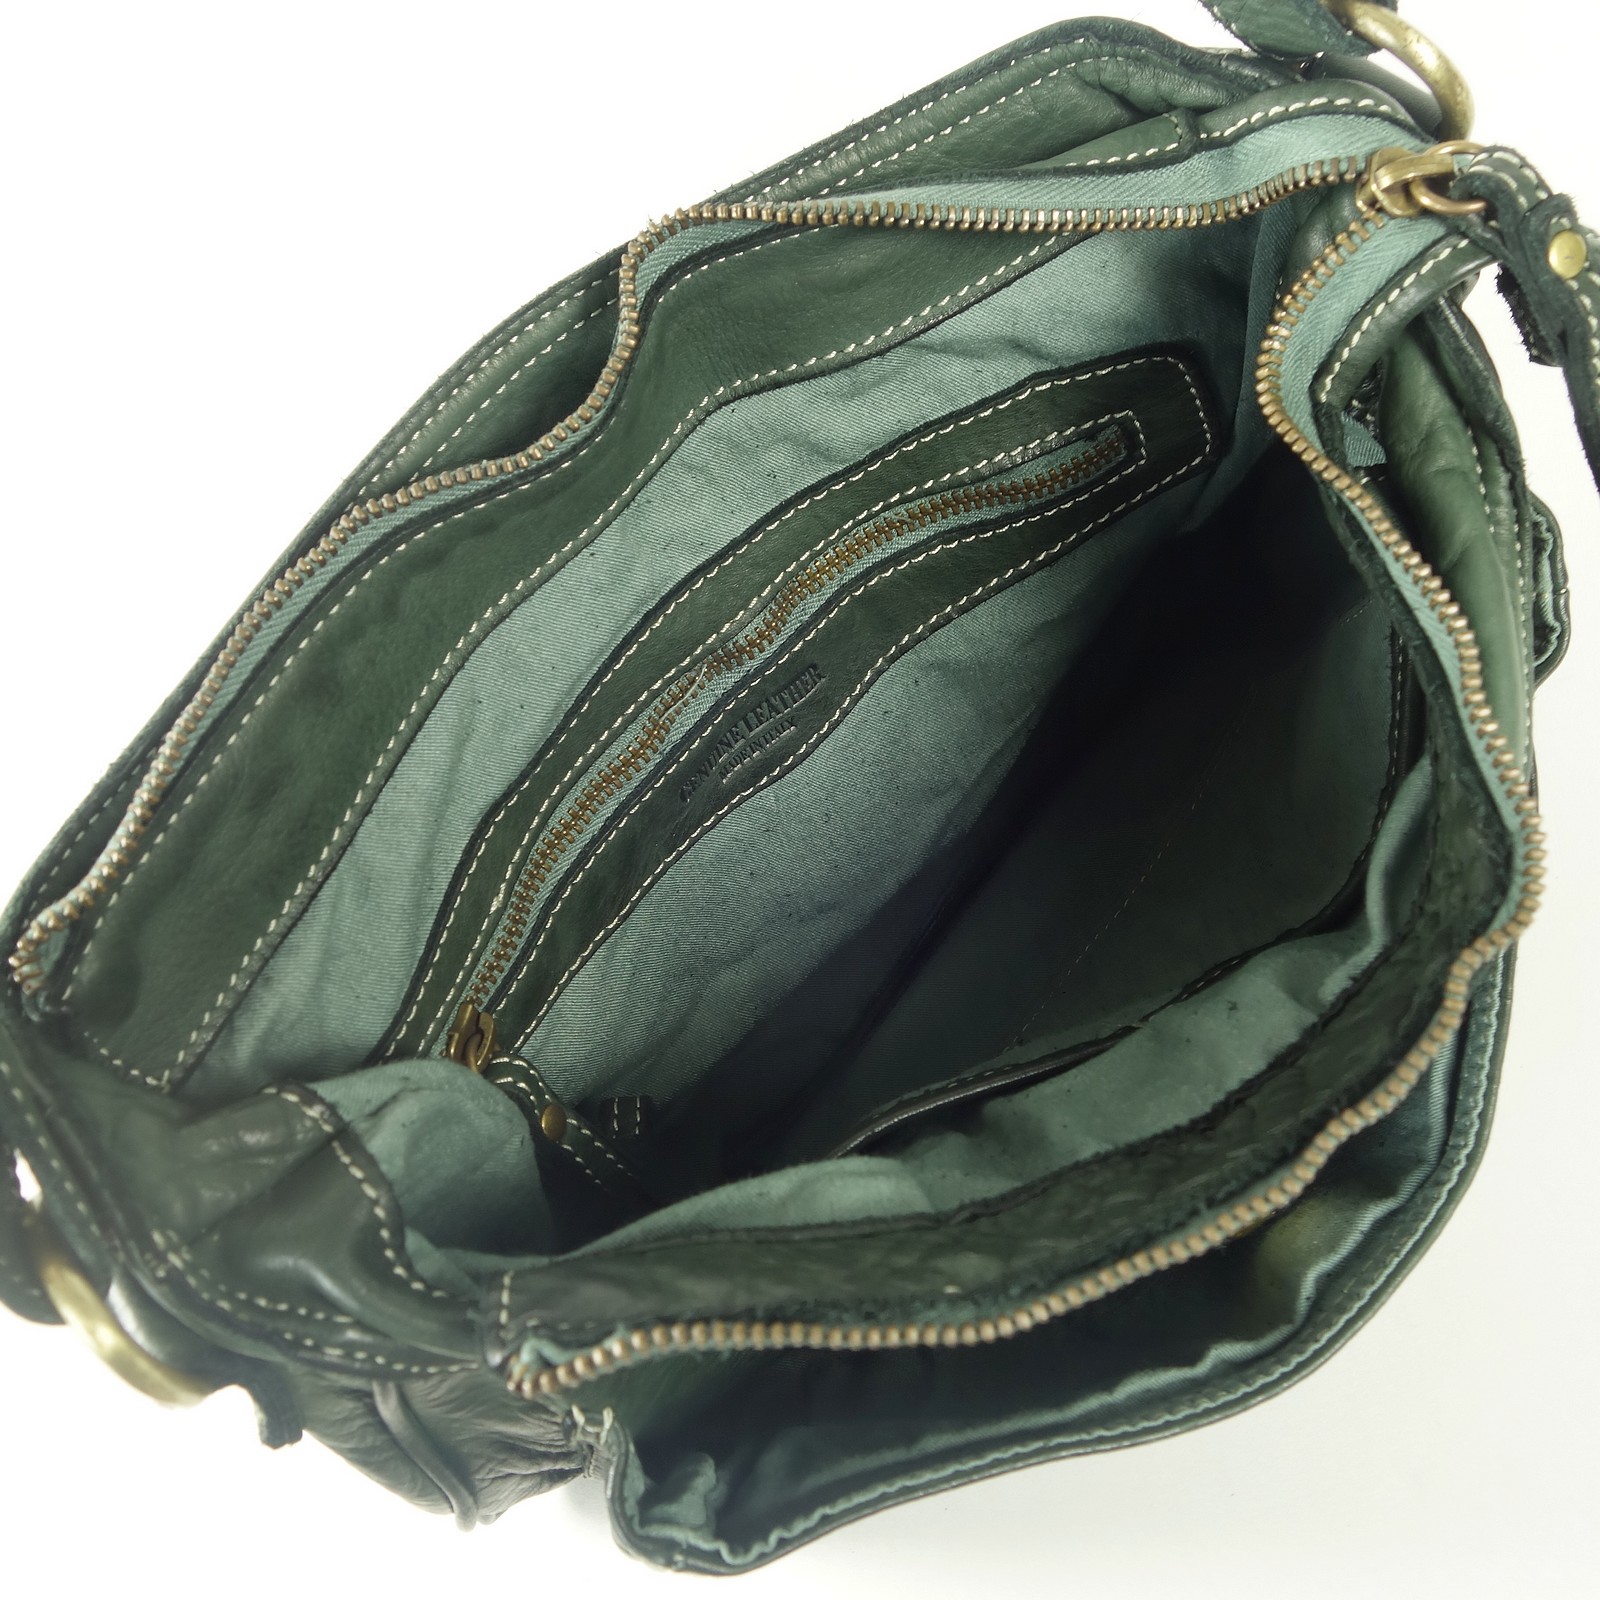 Grand sac pochette bandoulière cuir vert Elena/Collection Espritcuir